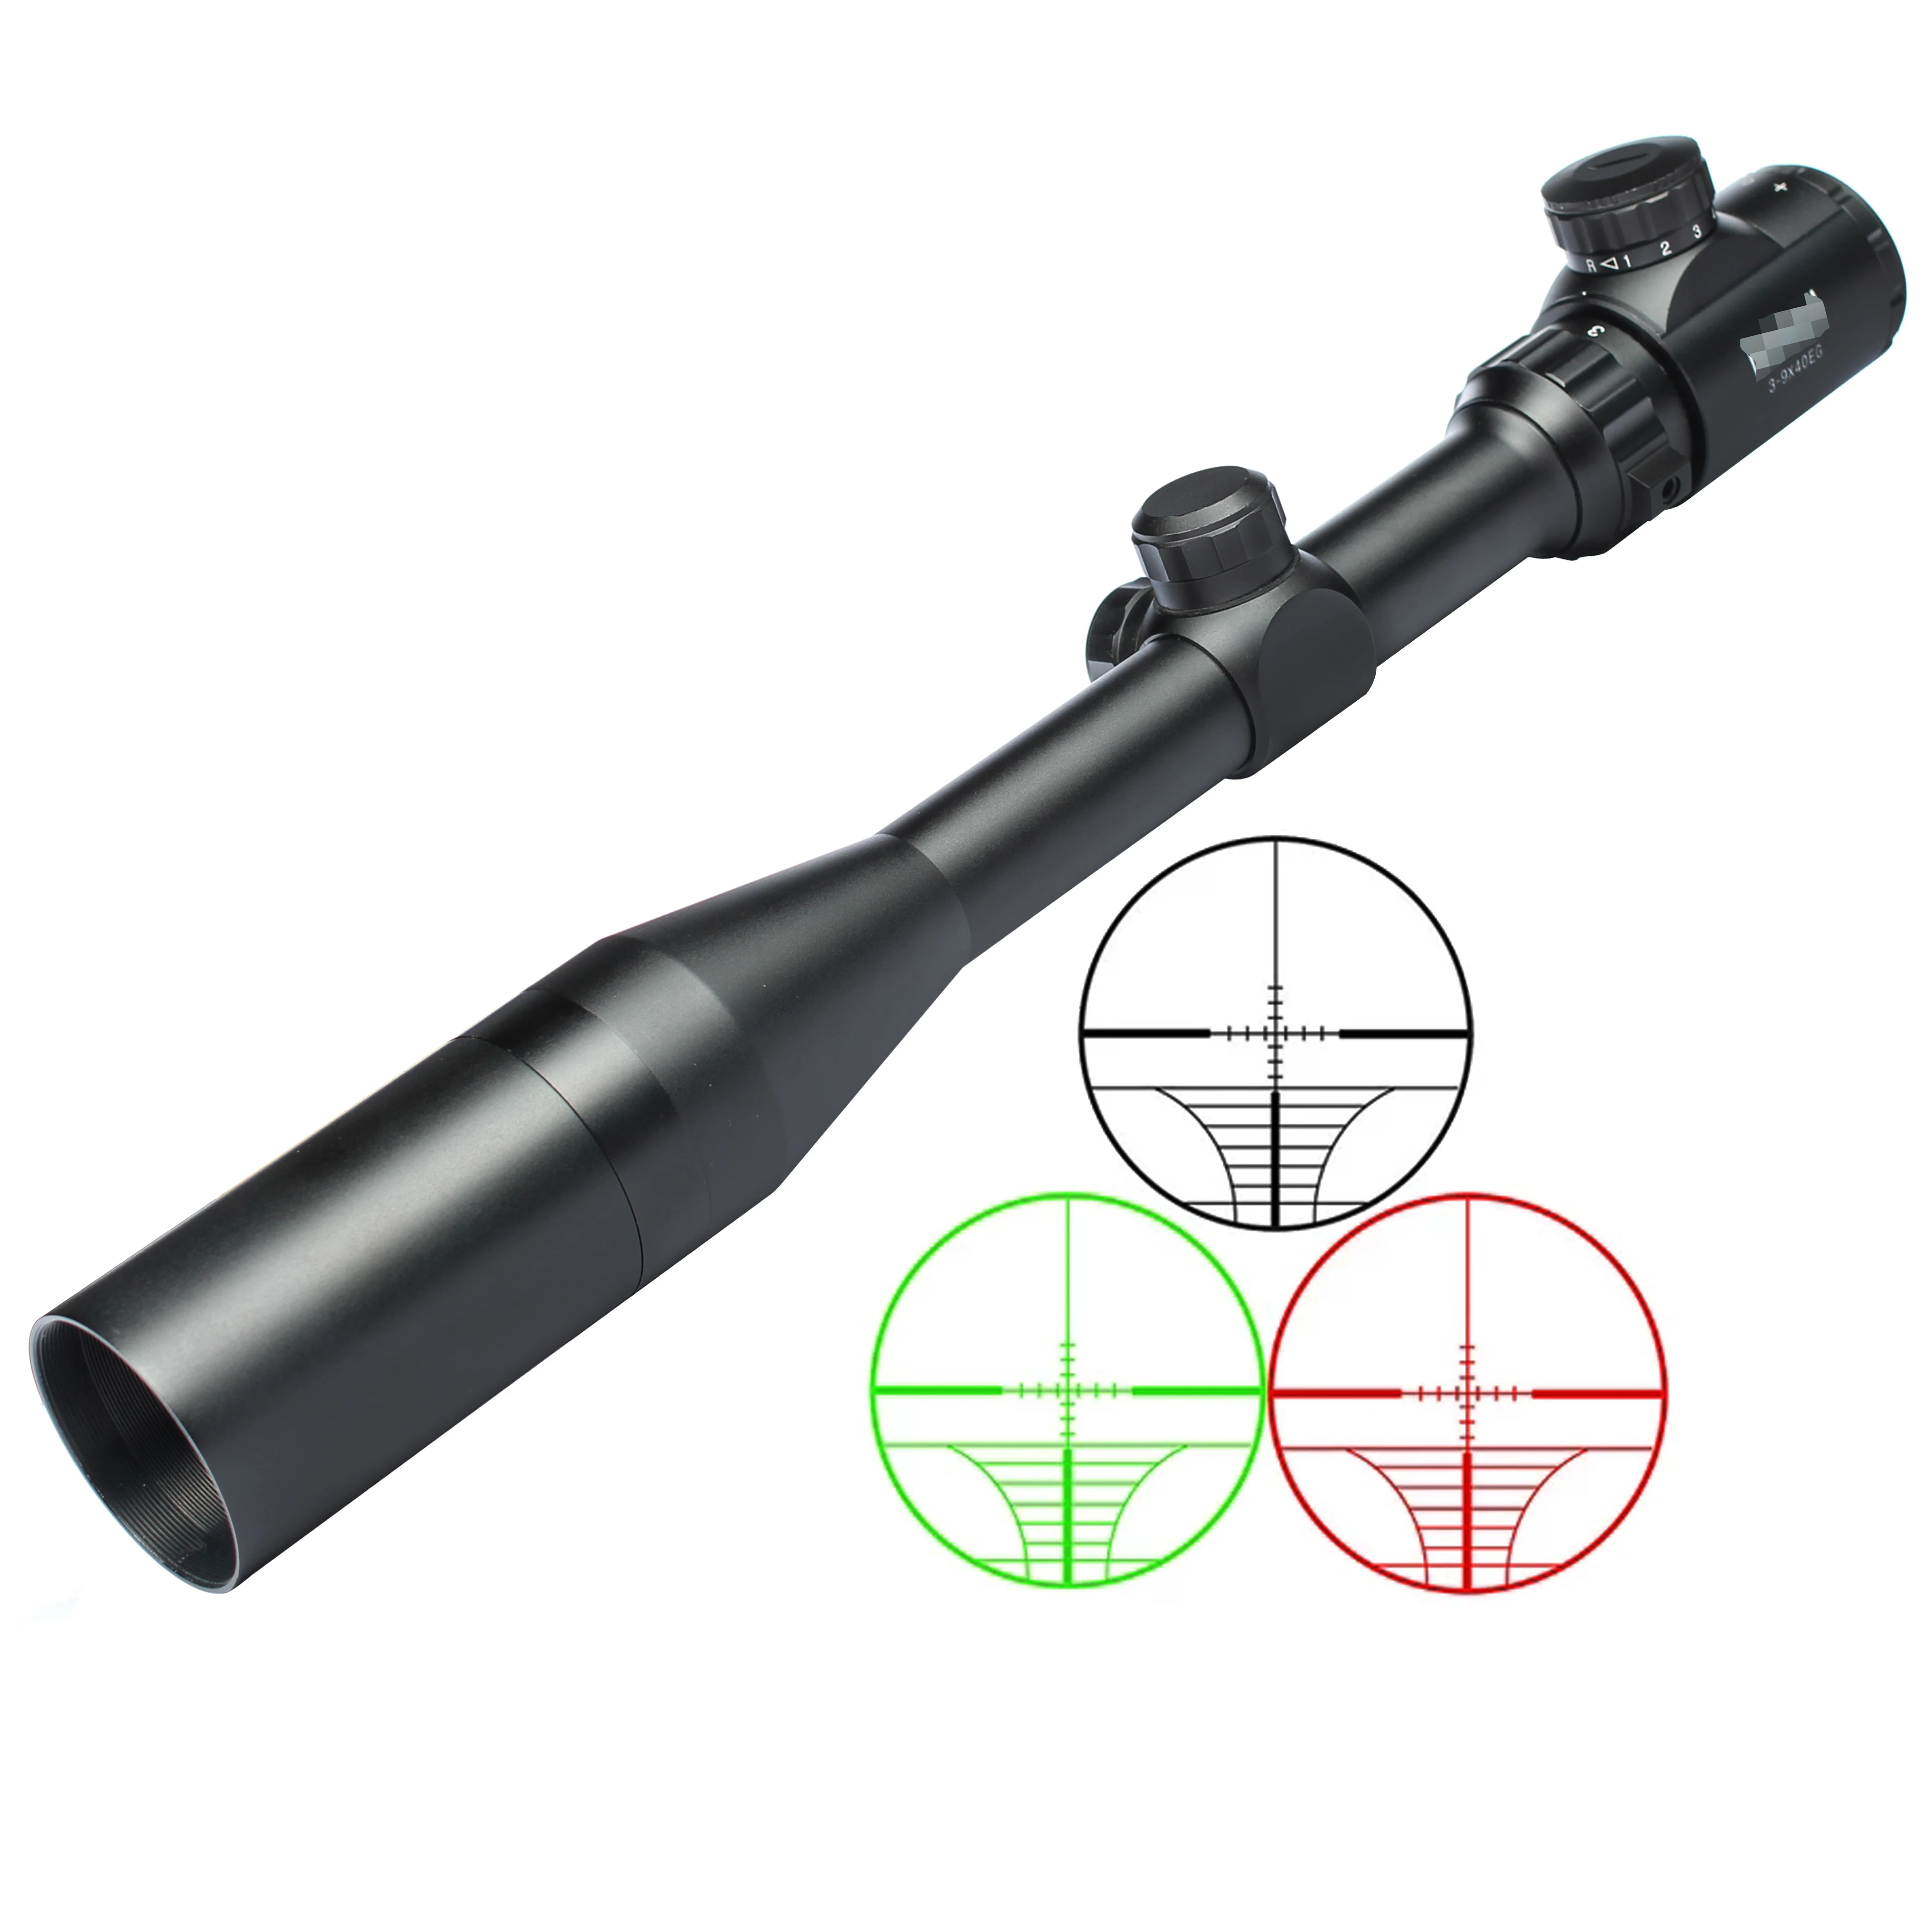 

SPINA gun Hunting Tactical Scope Optical Sight long range 3-9x40 EG Rifle scopes, Black